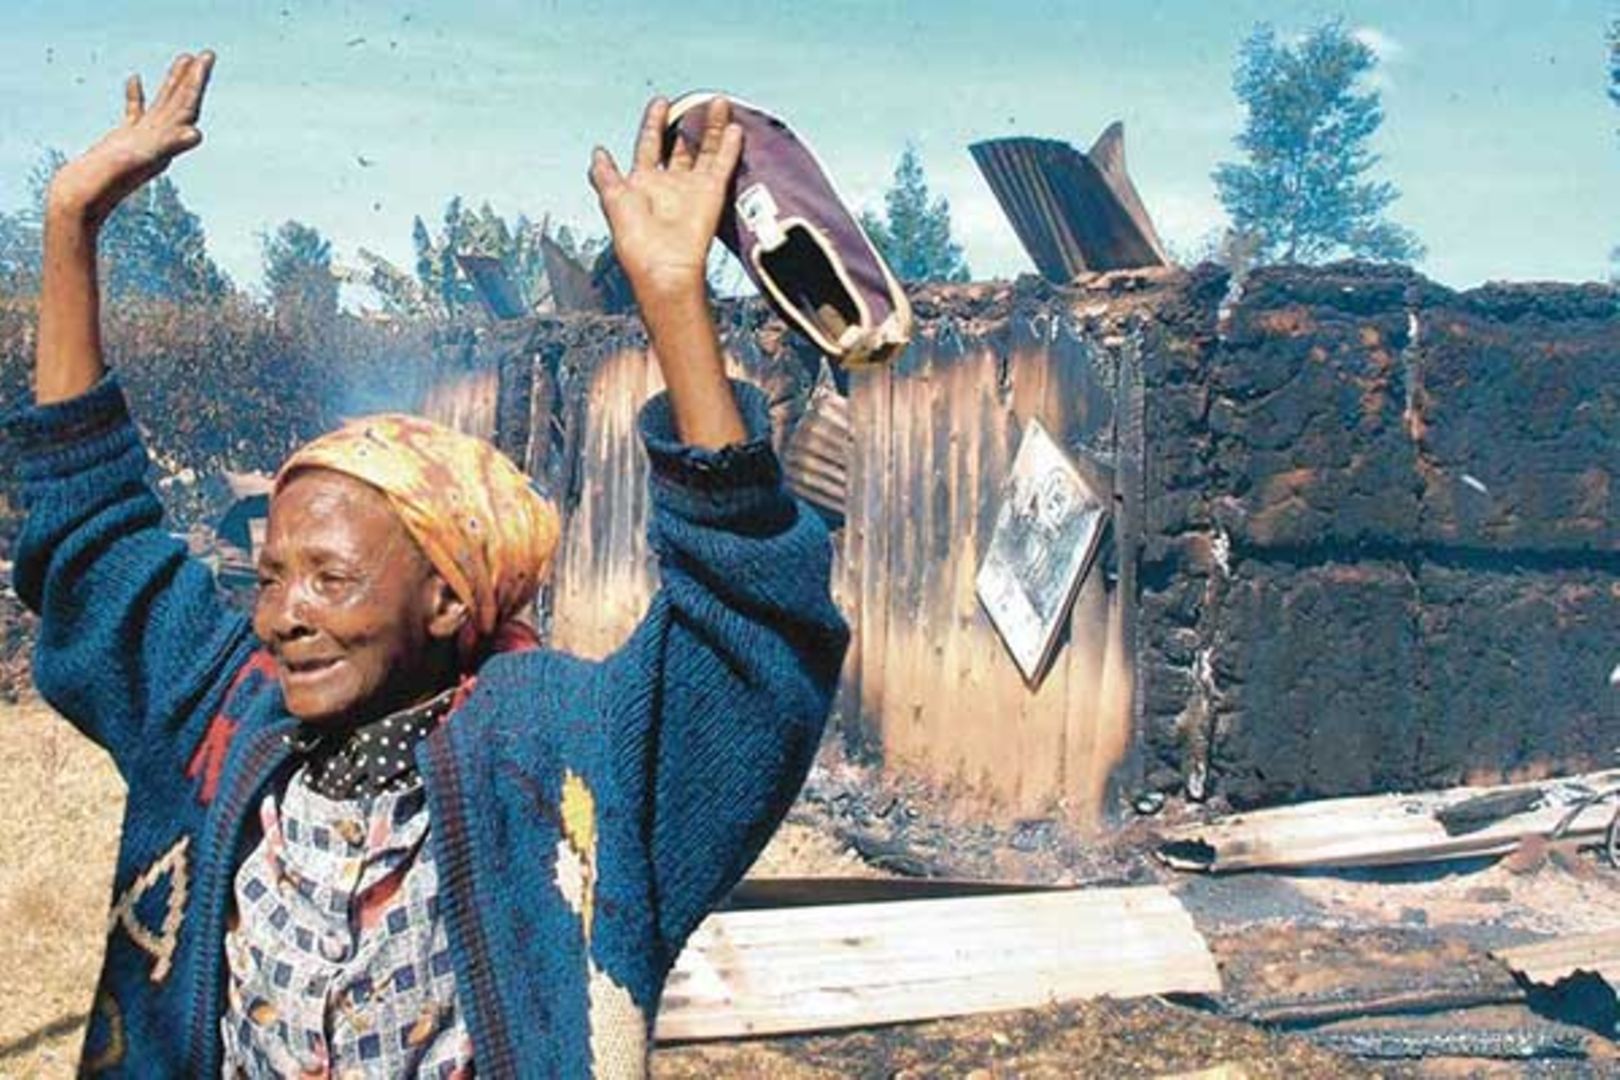 Curtain falls on icon of Eldoret's Kiambaa church fire | Nation